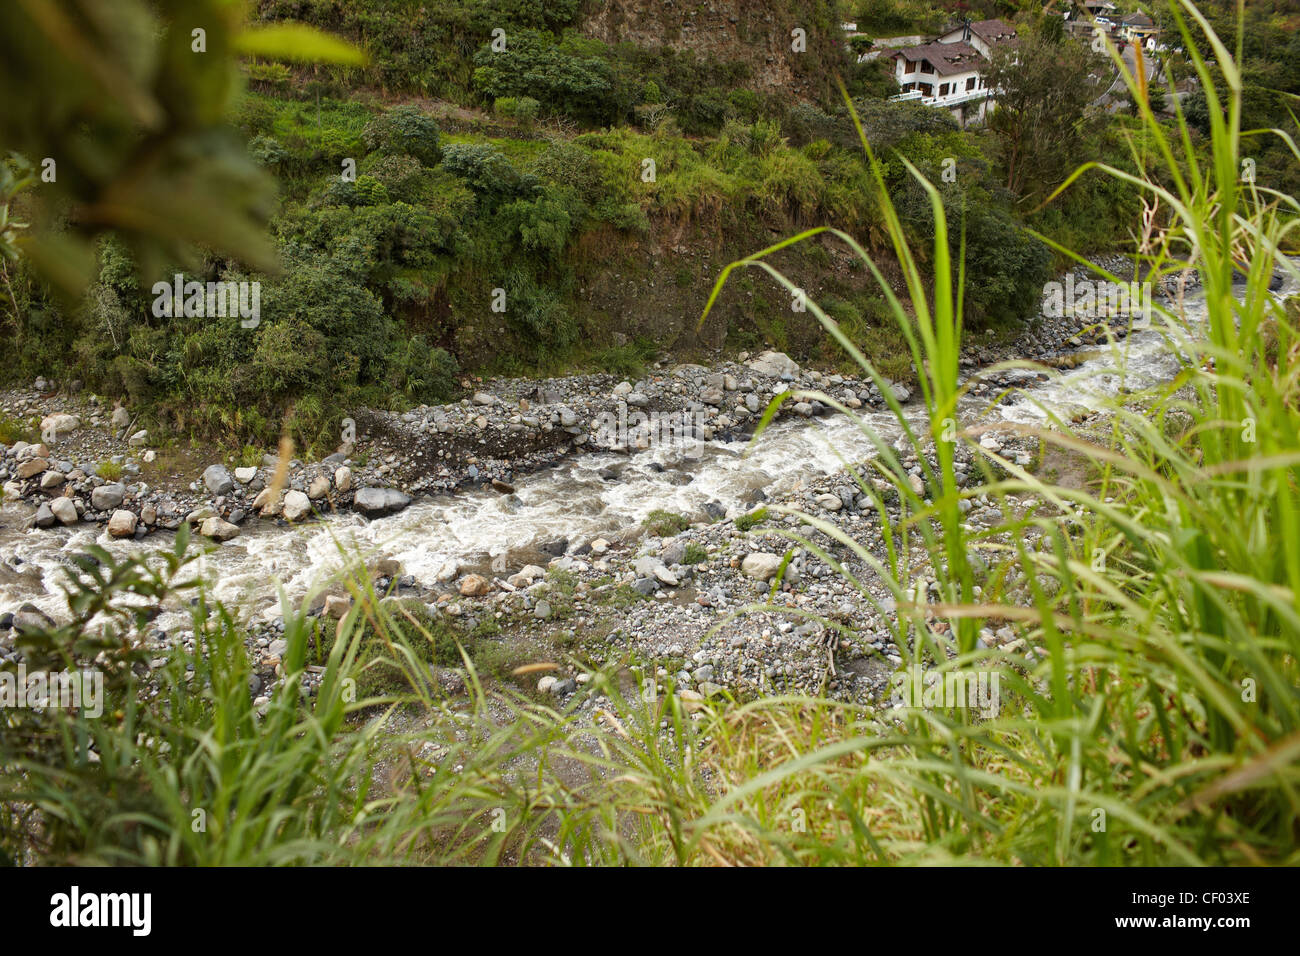 River in the jungles, waterfalls, rocks, stones Stock Photo